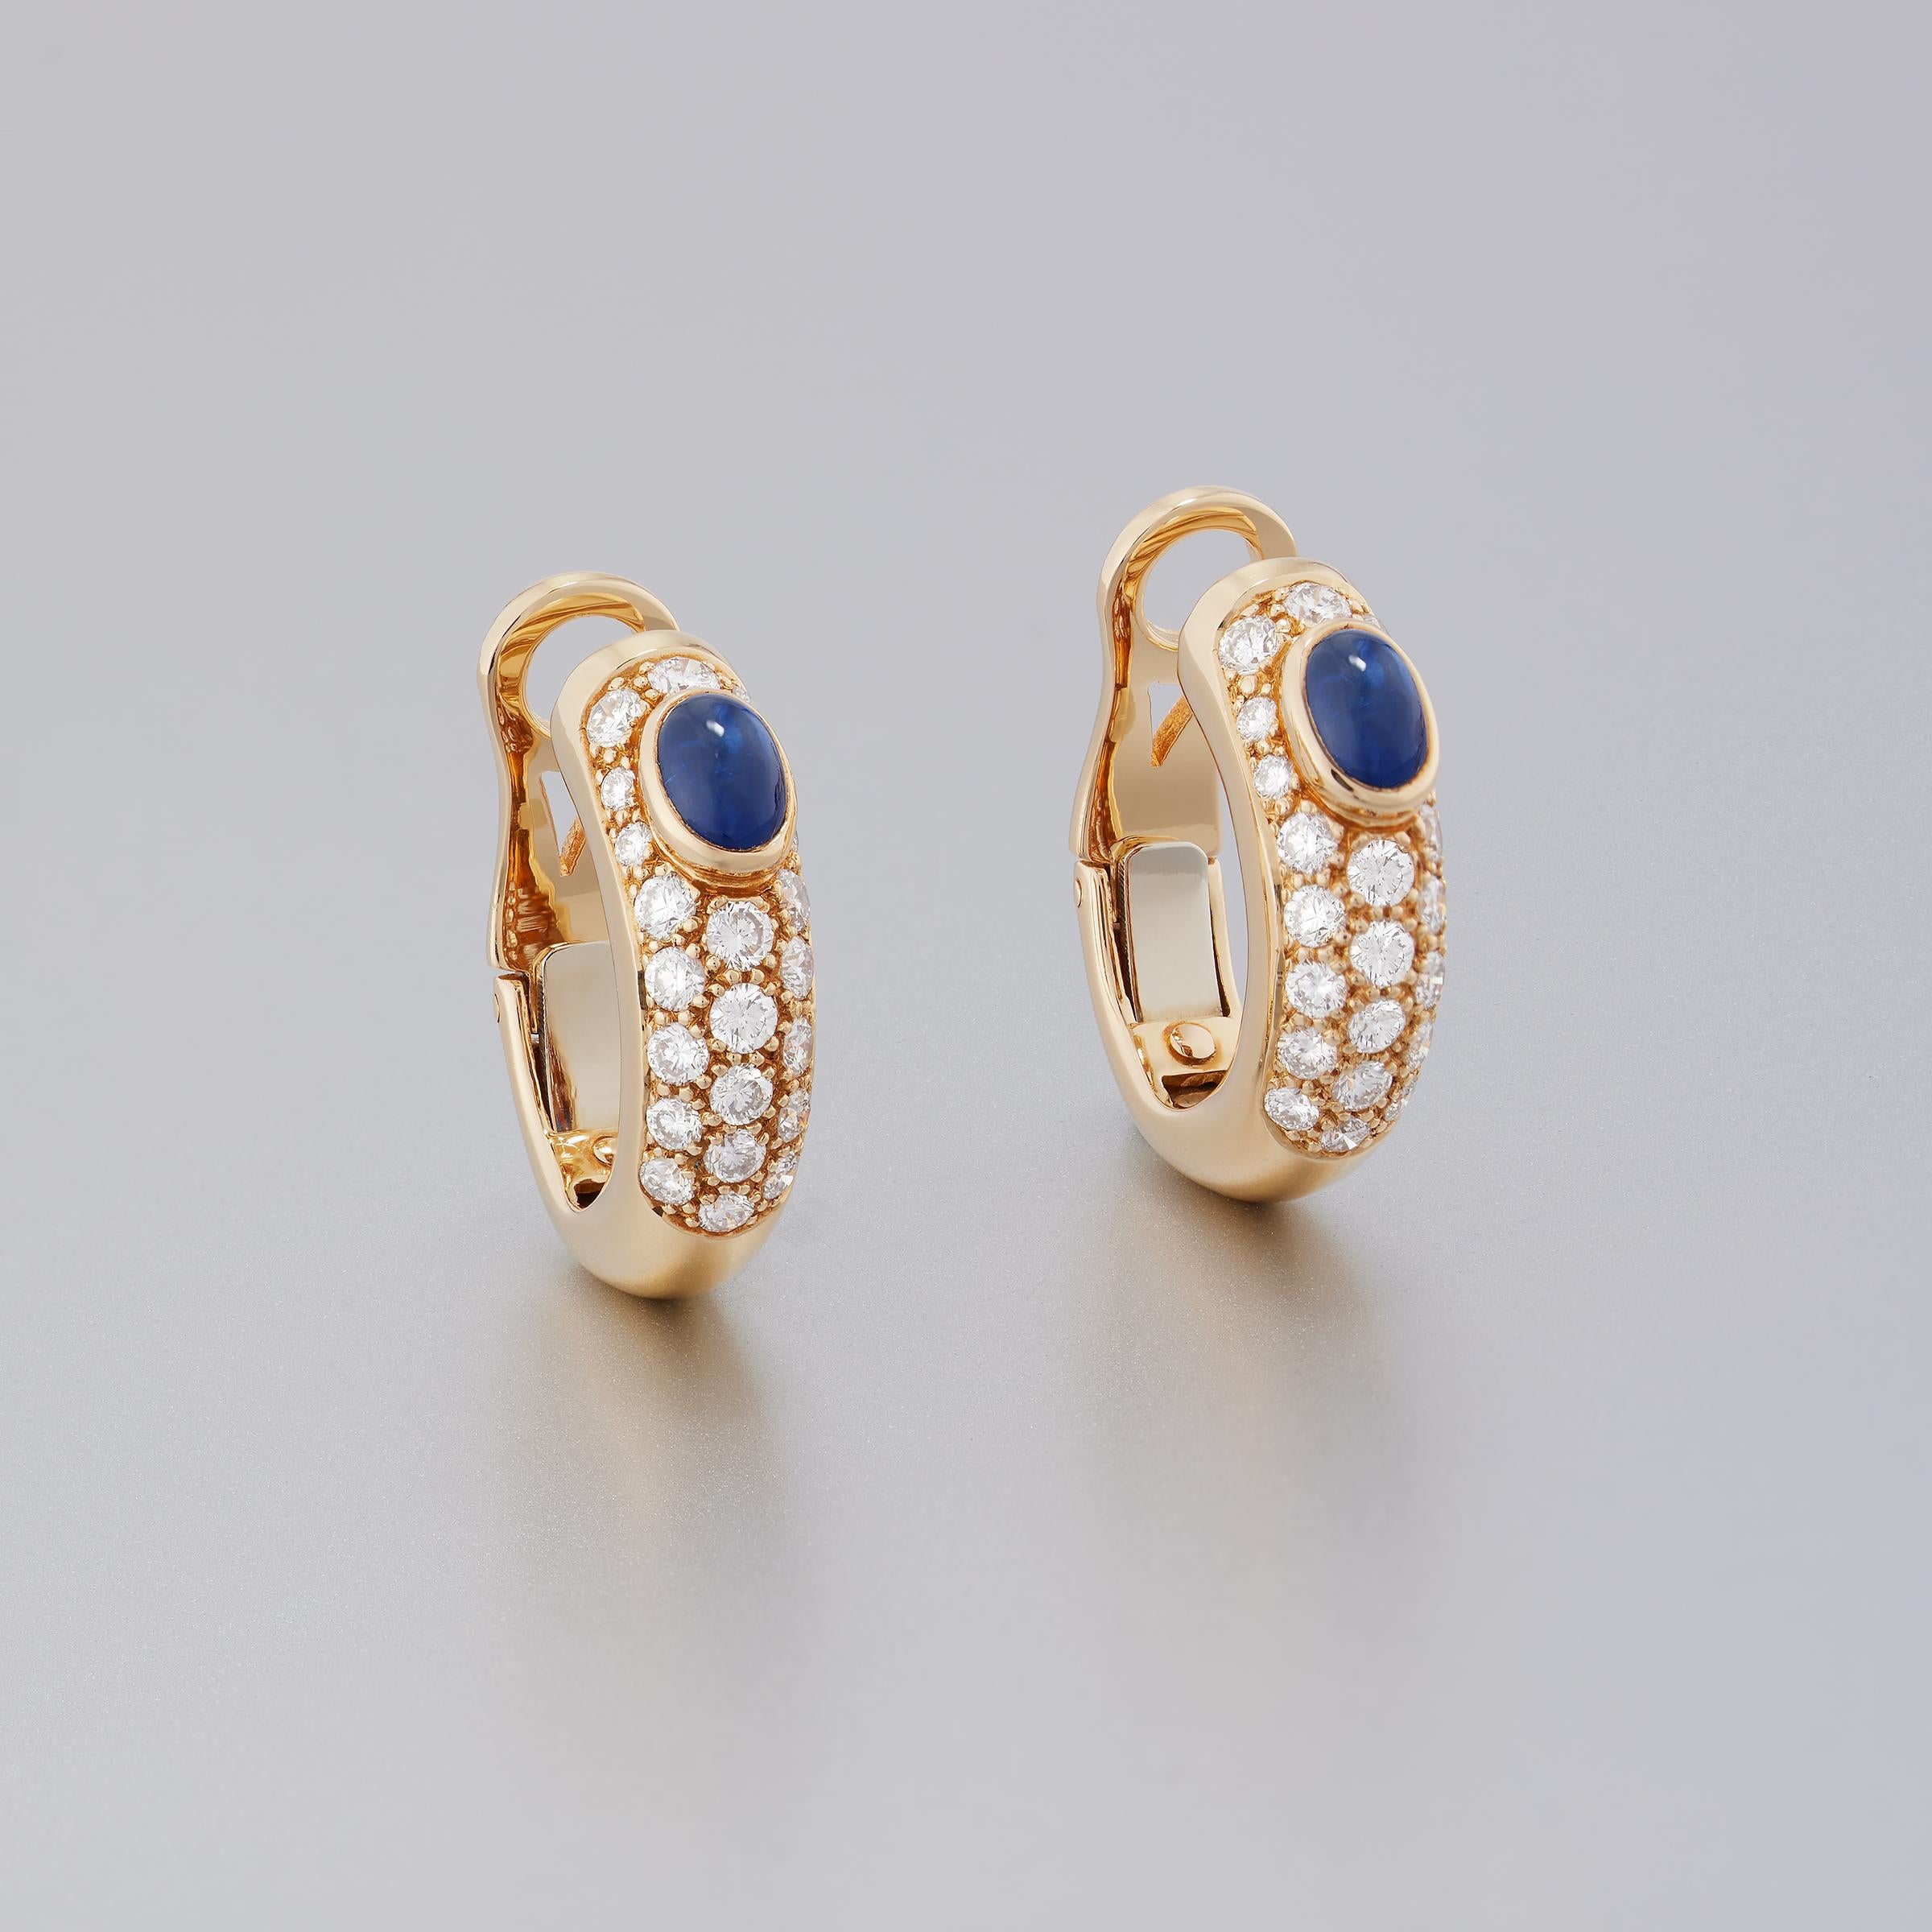 Brilliant Cut Cartier Paris Vintage Diamond Sapphire Hoop Earrings in 18K Gold